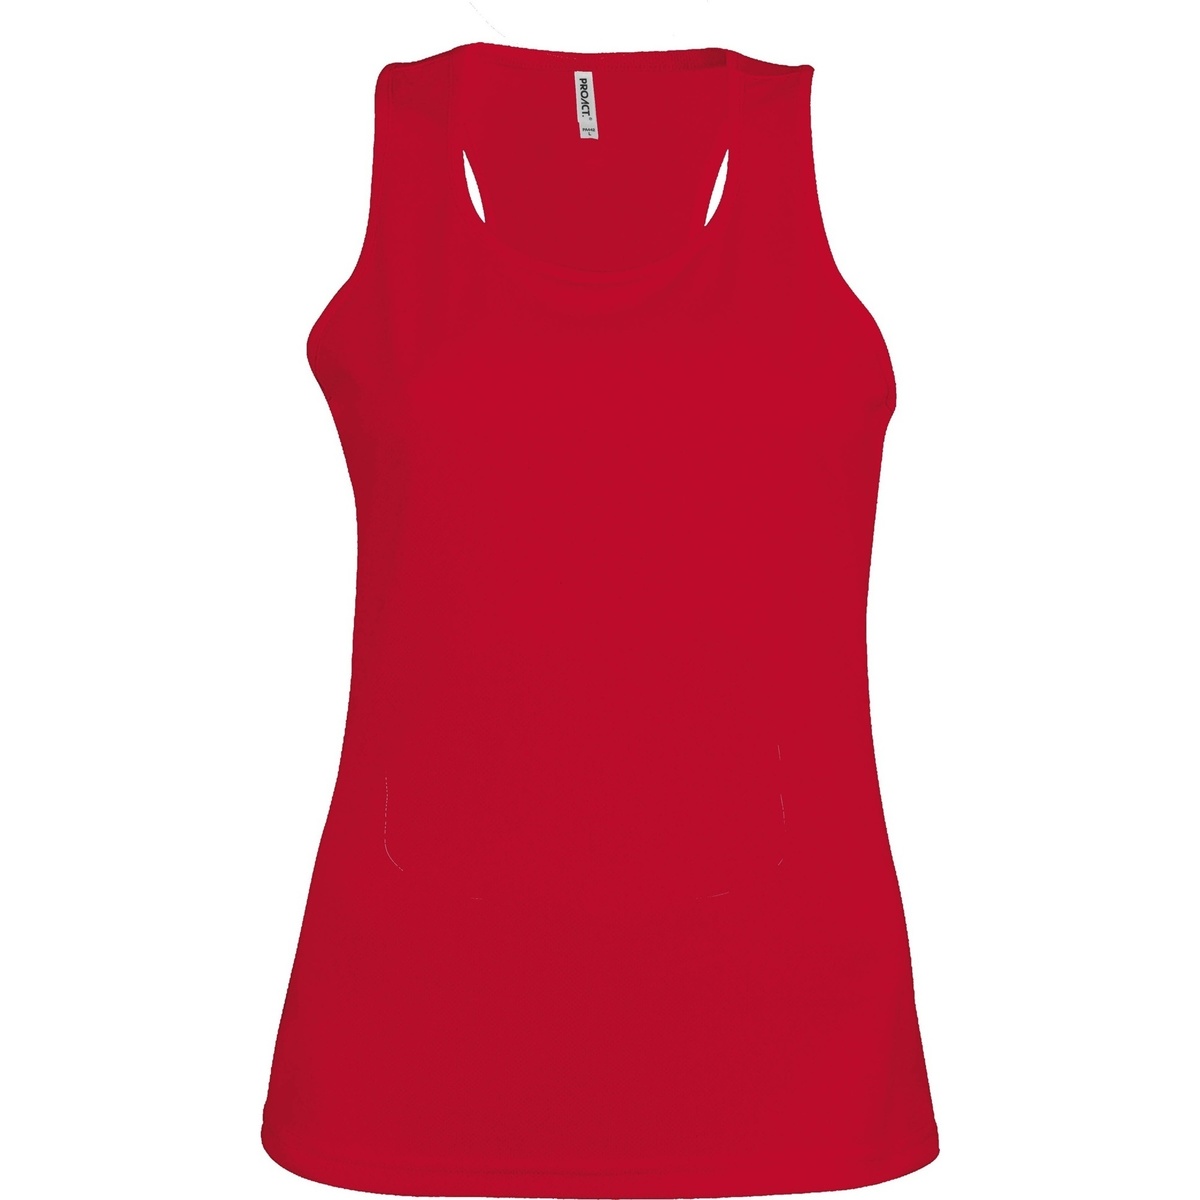 Abbigliamento Donna Top / T-shirt senza maniche Kariban Proact Proact Rosso